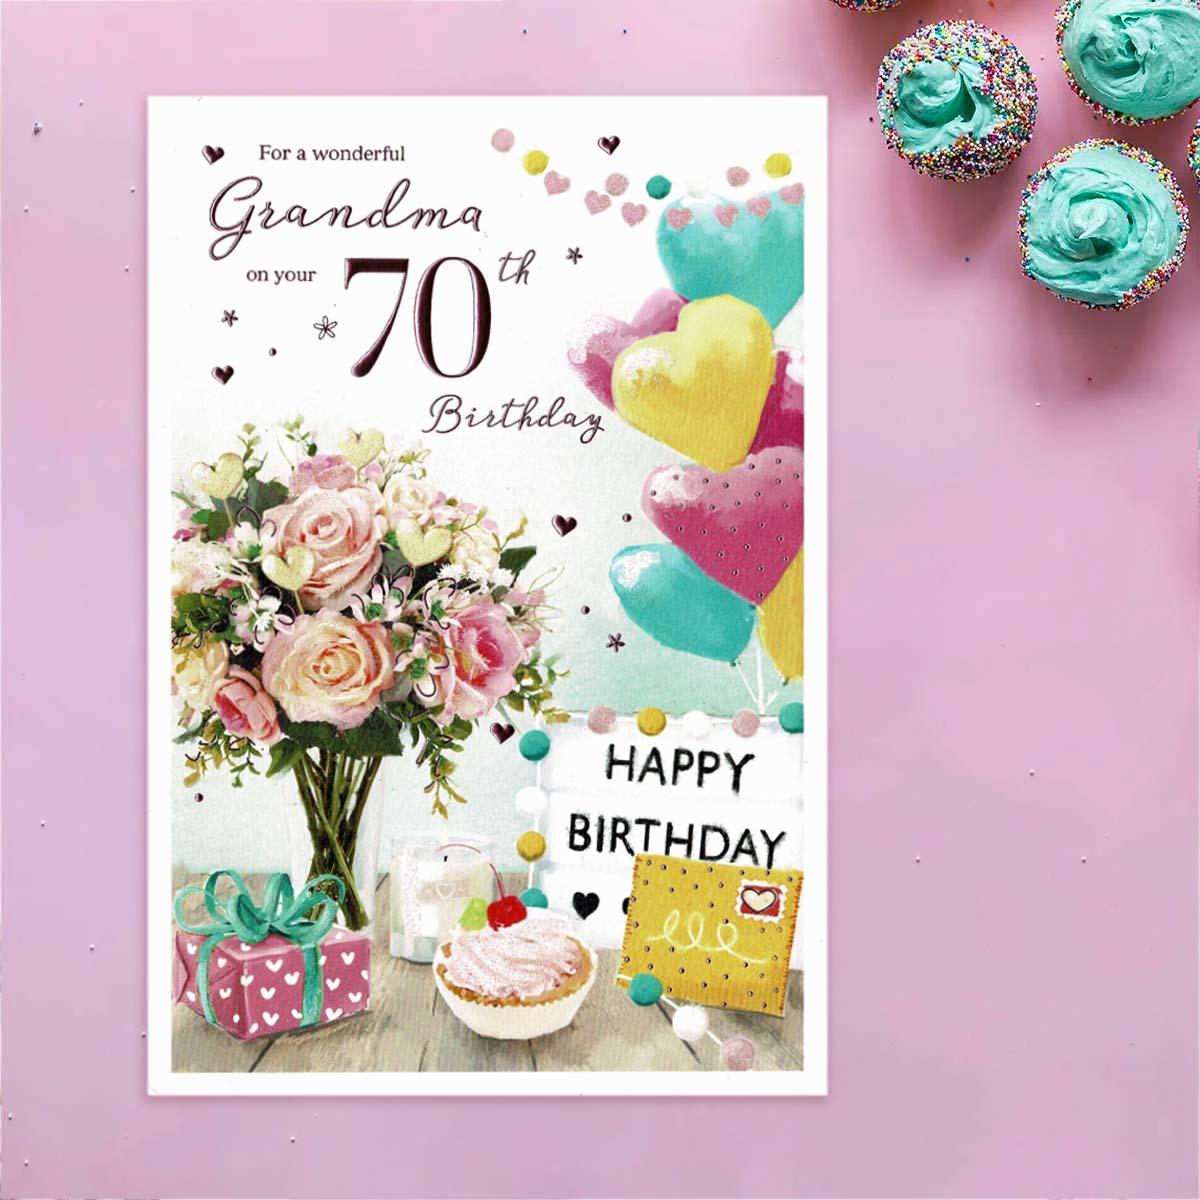 Grandma 70th Birthday Card Shown In Full